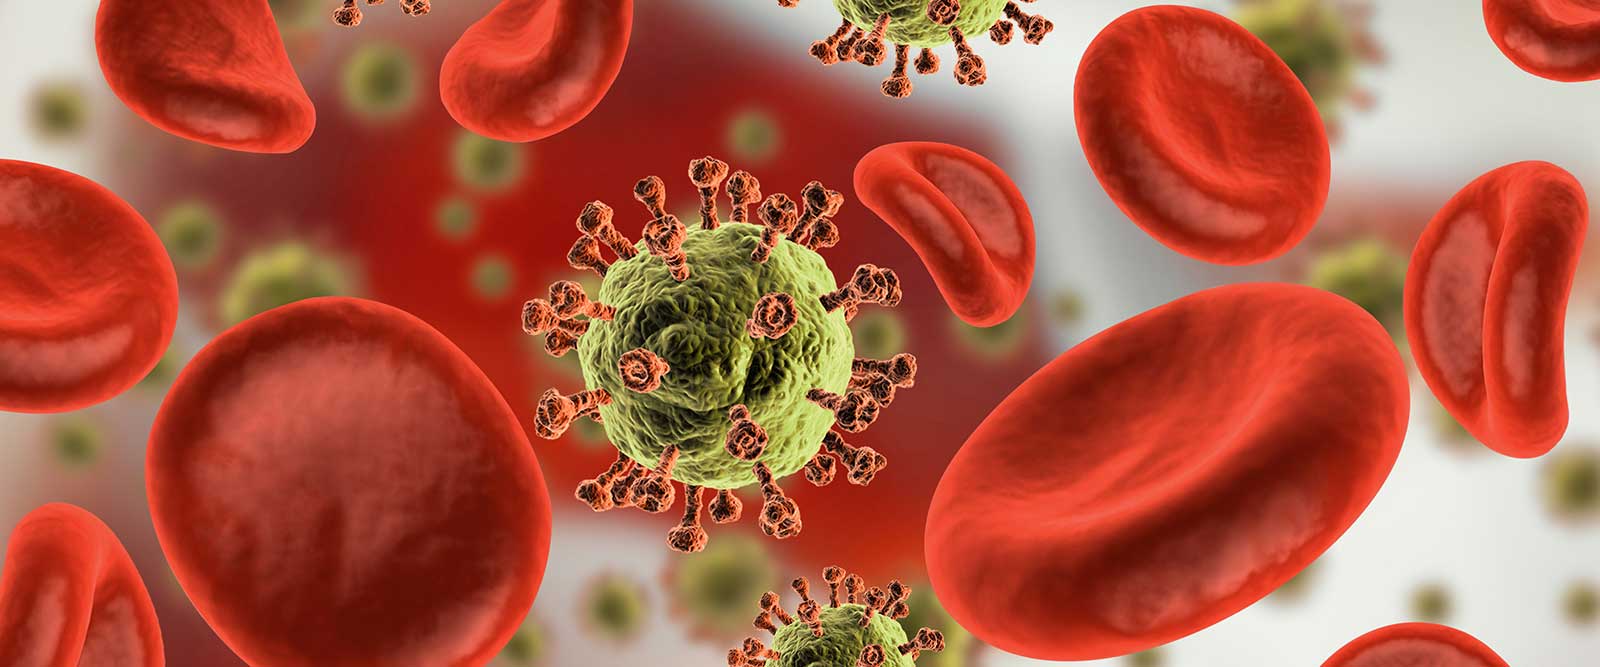 Bloodborne Pathogens Environment Health and Safety